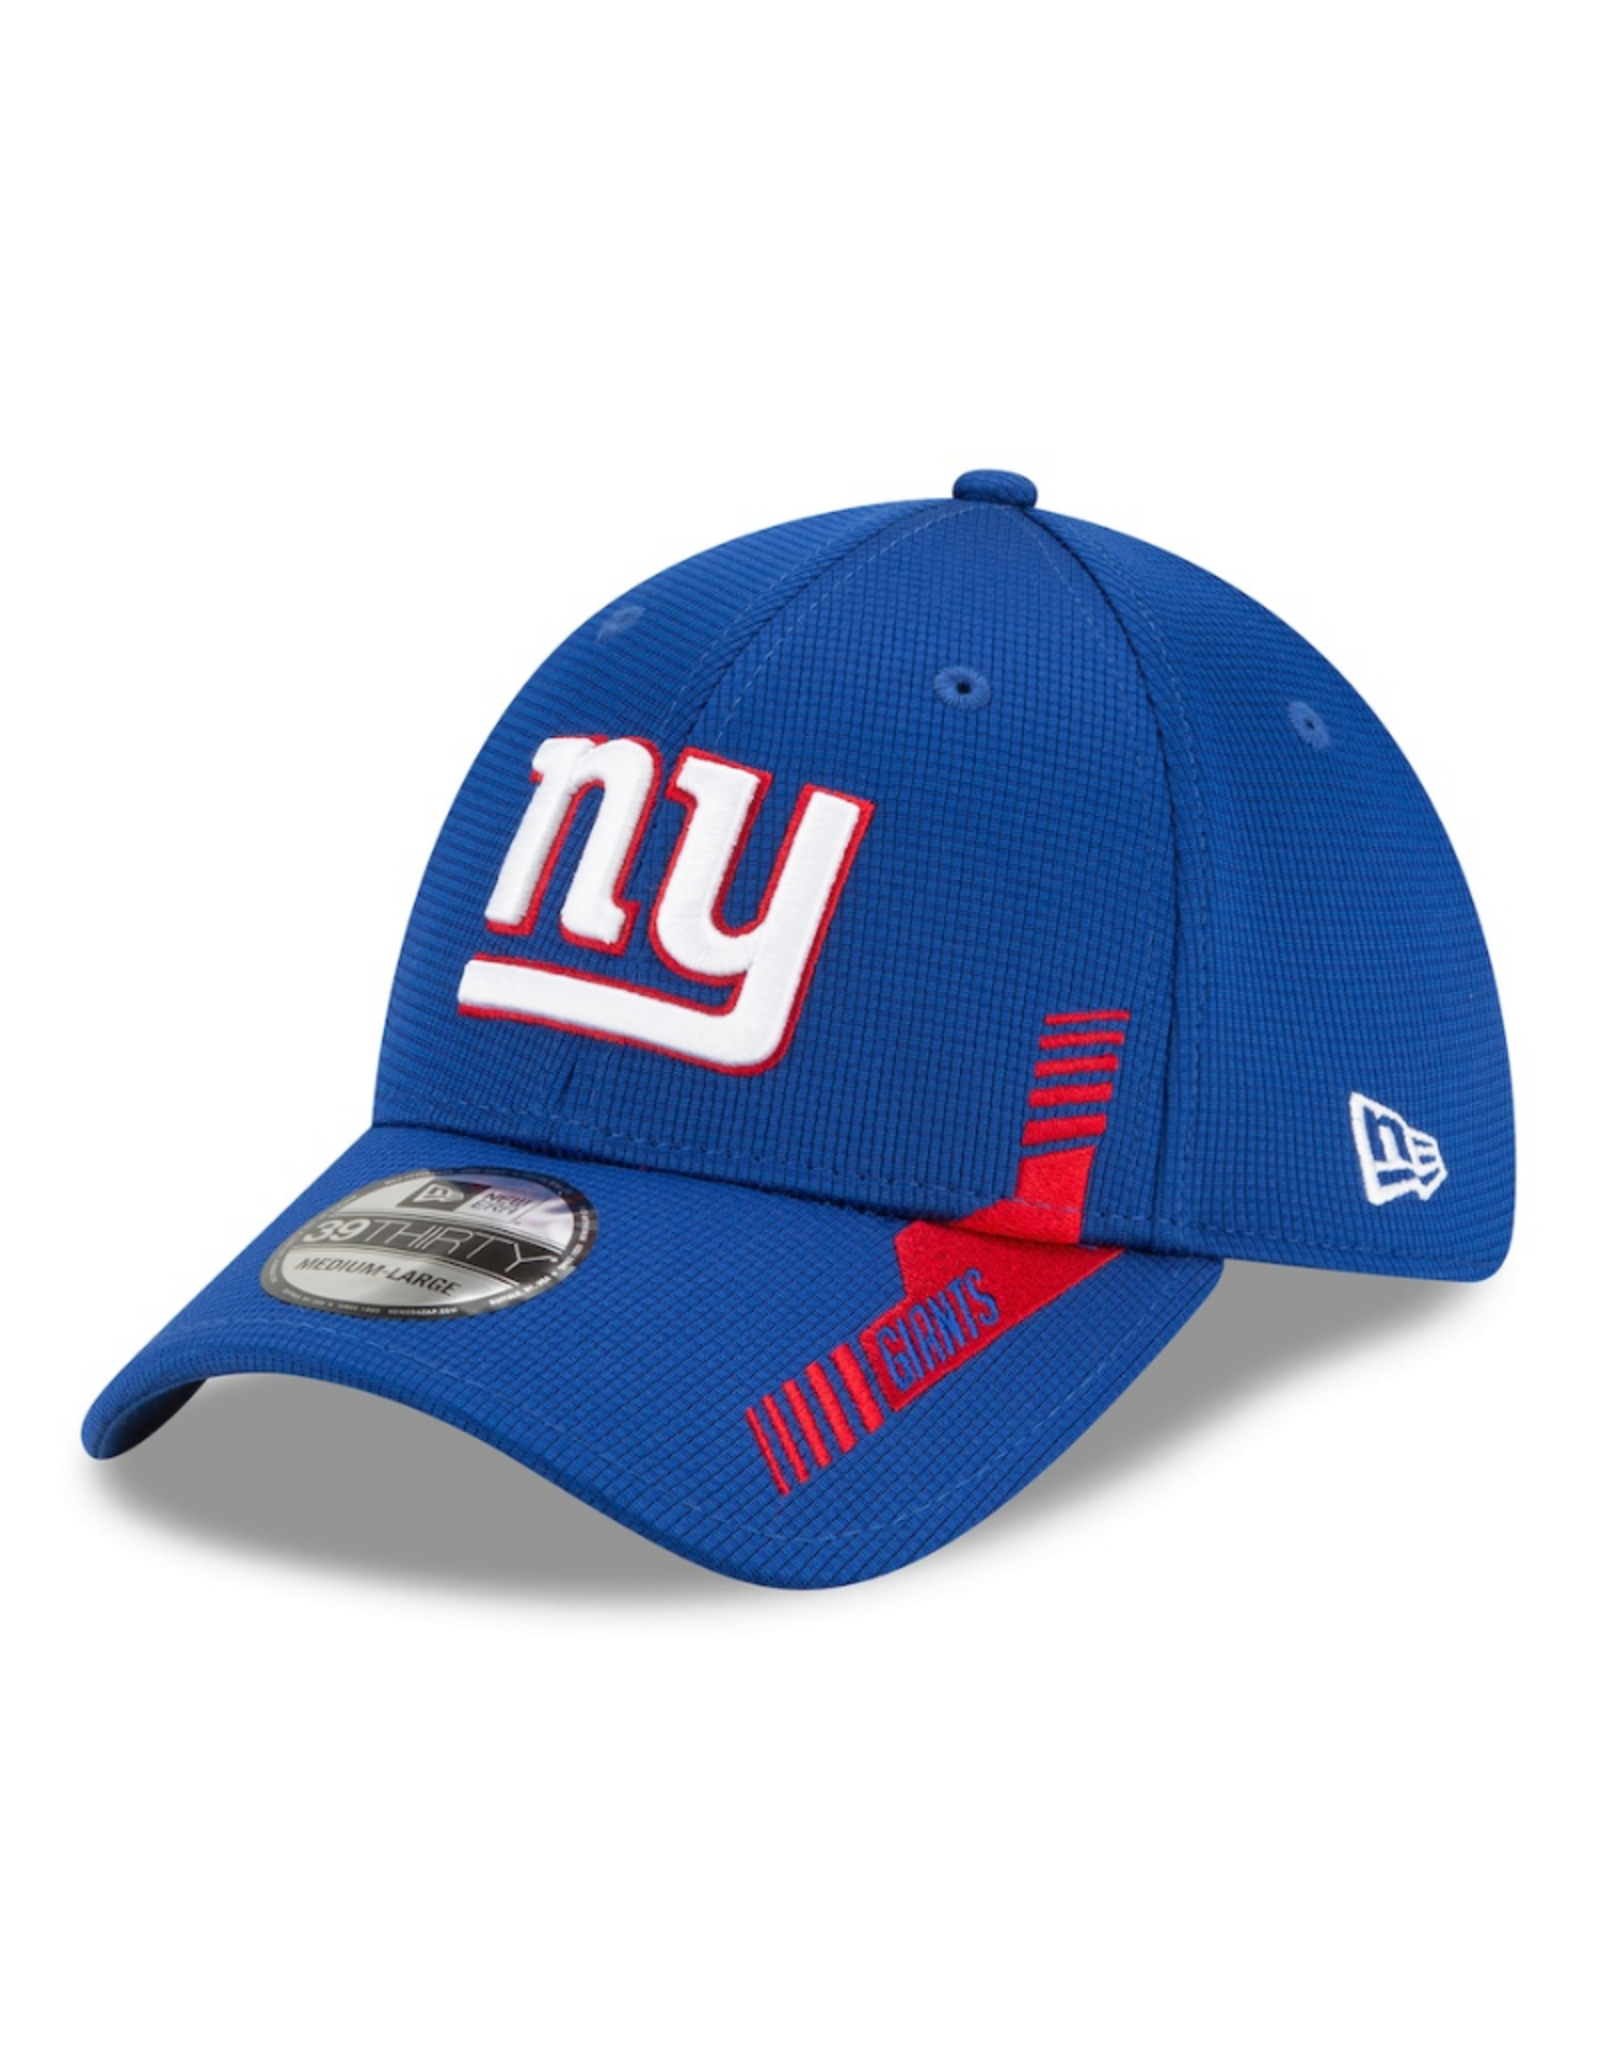 New Era Men's '21 39THIRTY Sideline Home Hat New York Giants Blue